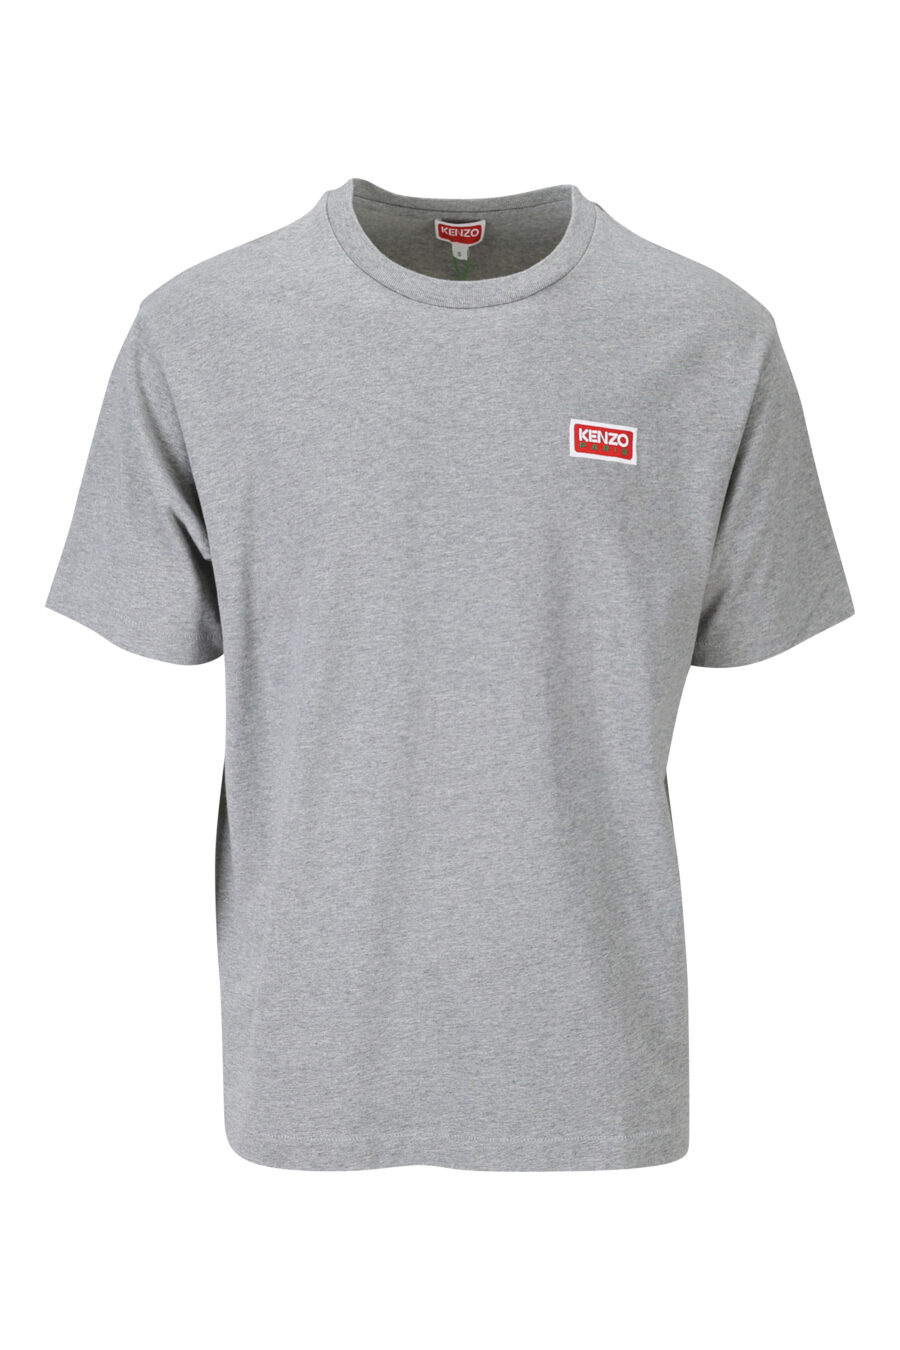 Graues T-Shirt mit Minilogo "kenzo paris" - 3612230543188